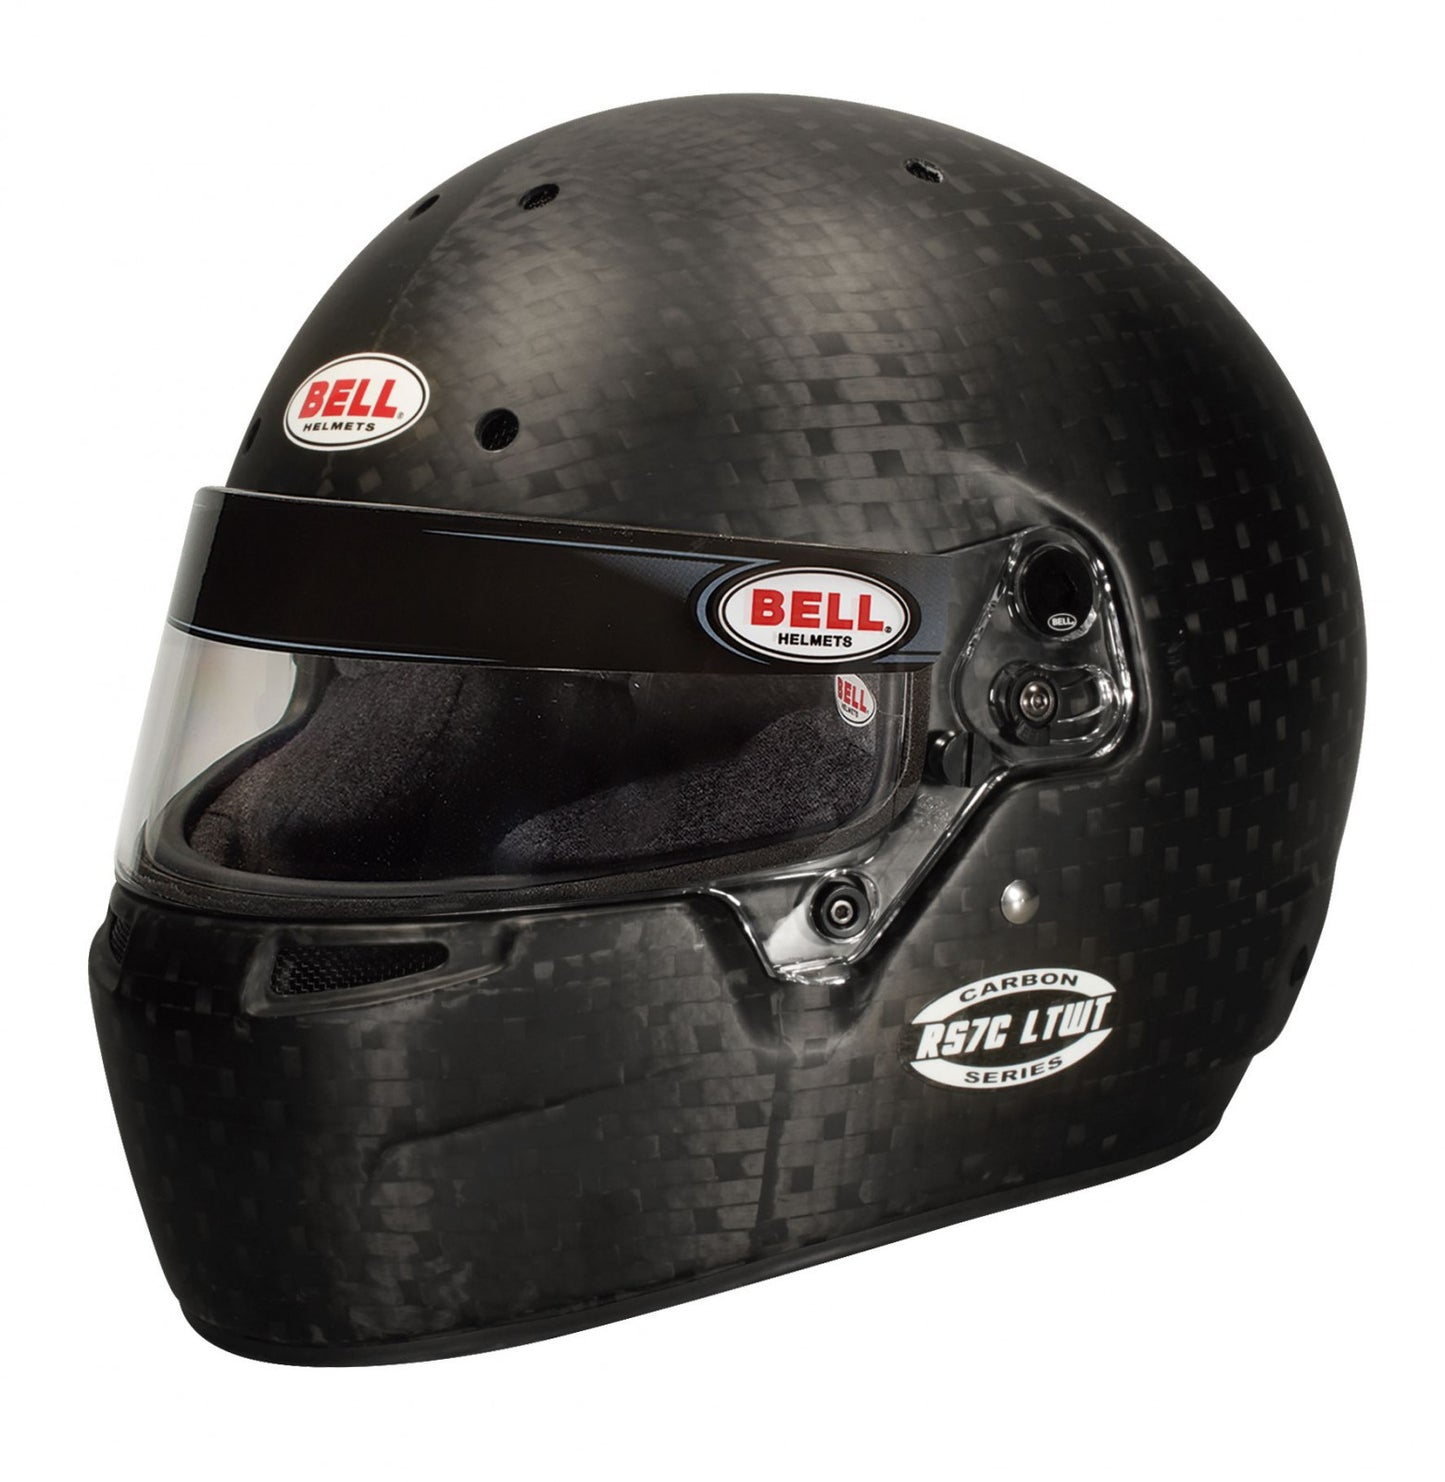 Bell Racing RS7C LTWT Helmet 7 5/8 (61 cm) 1237A11